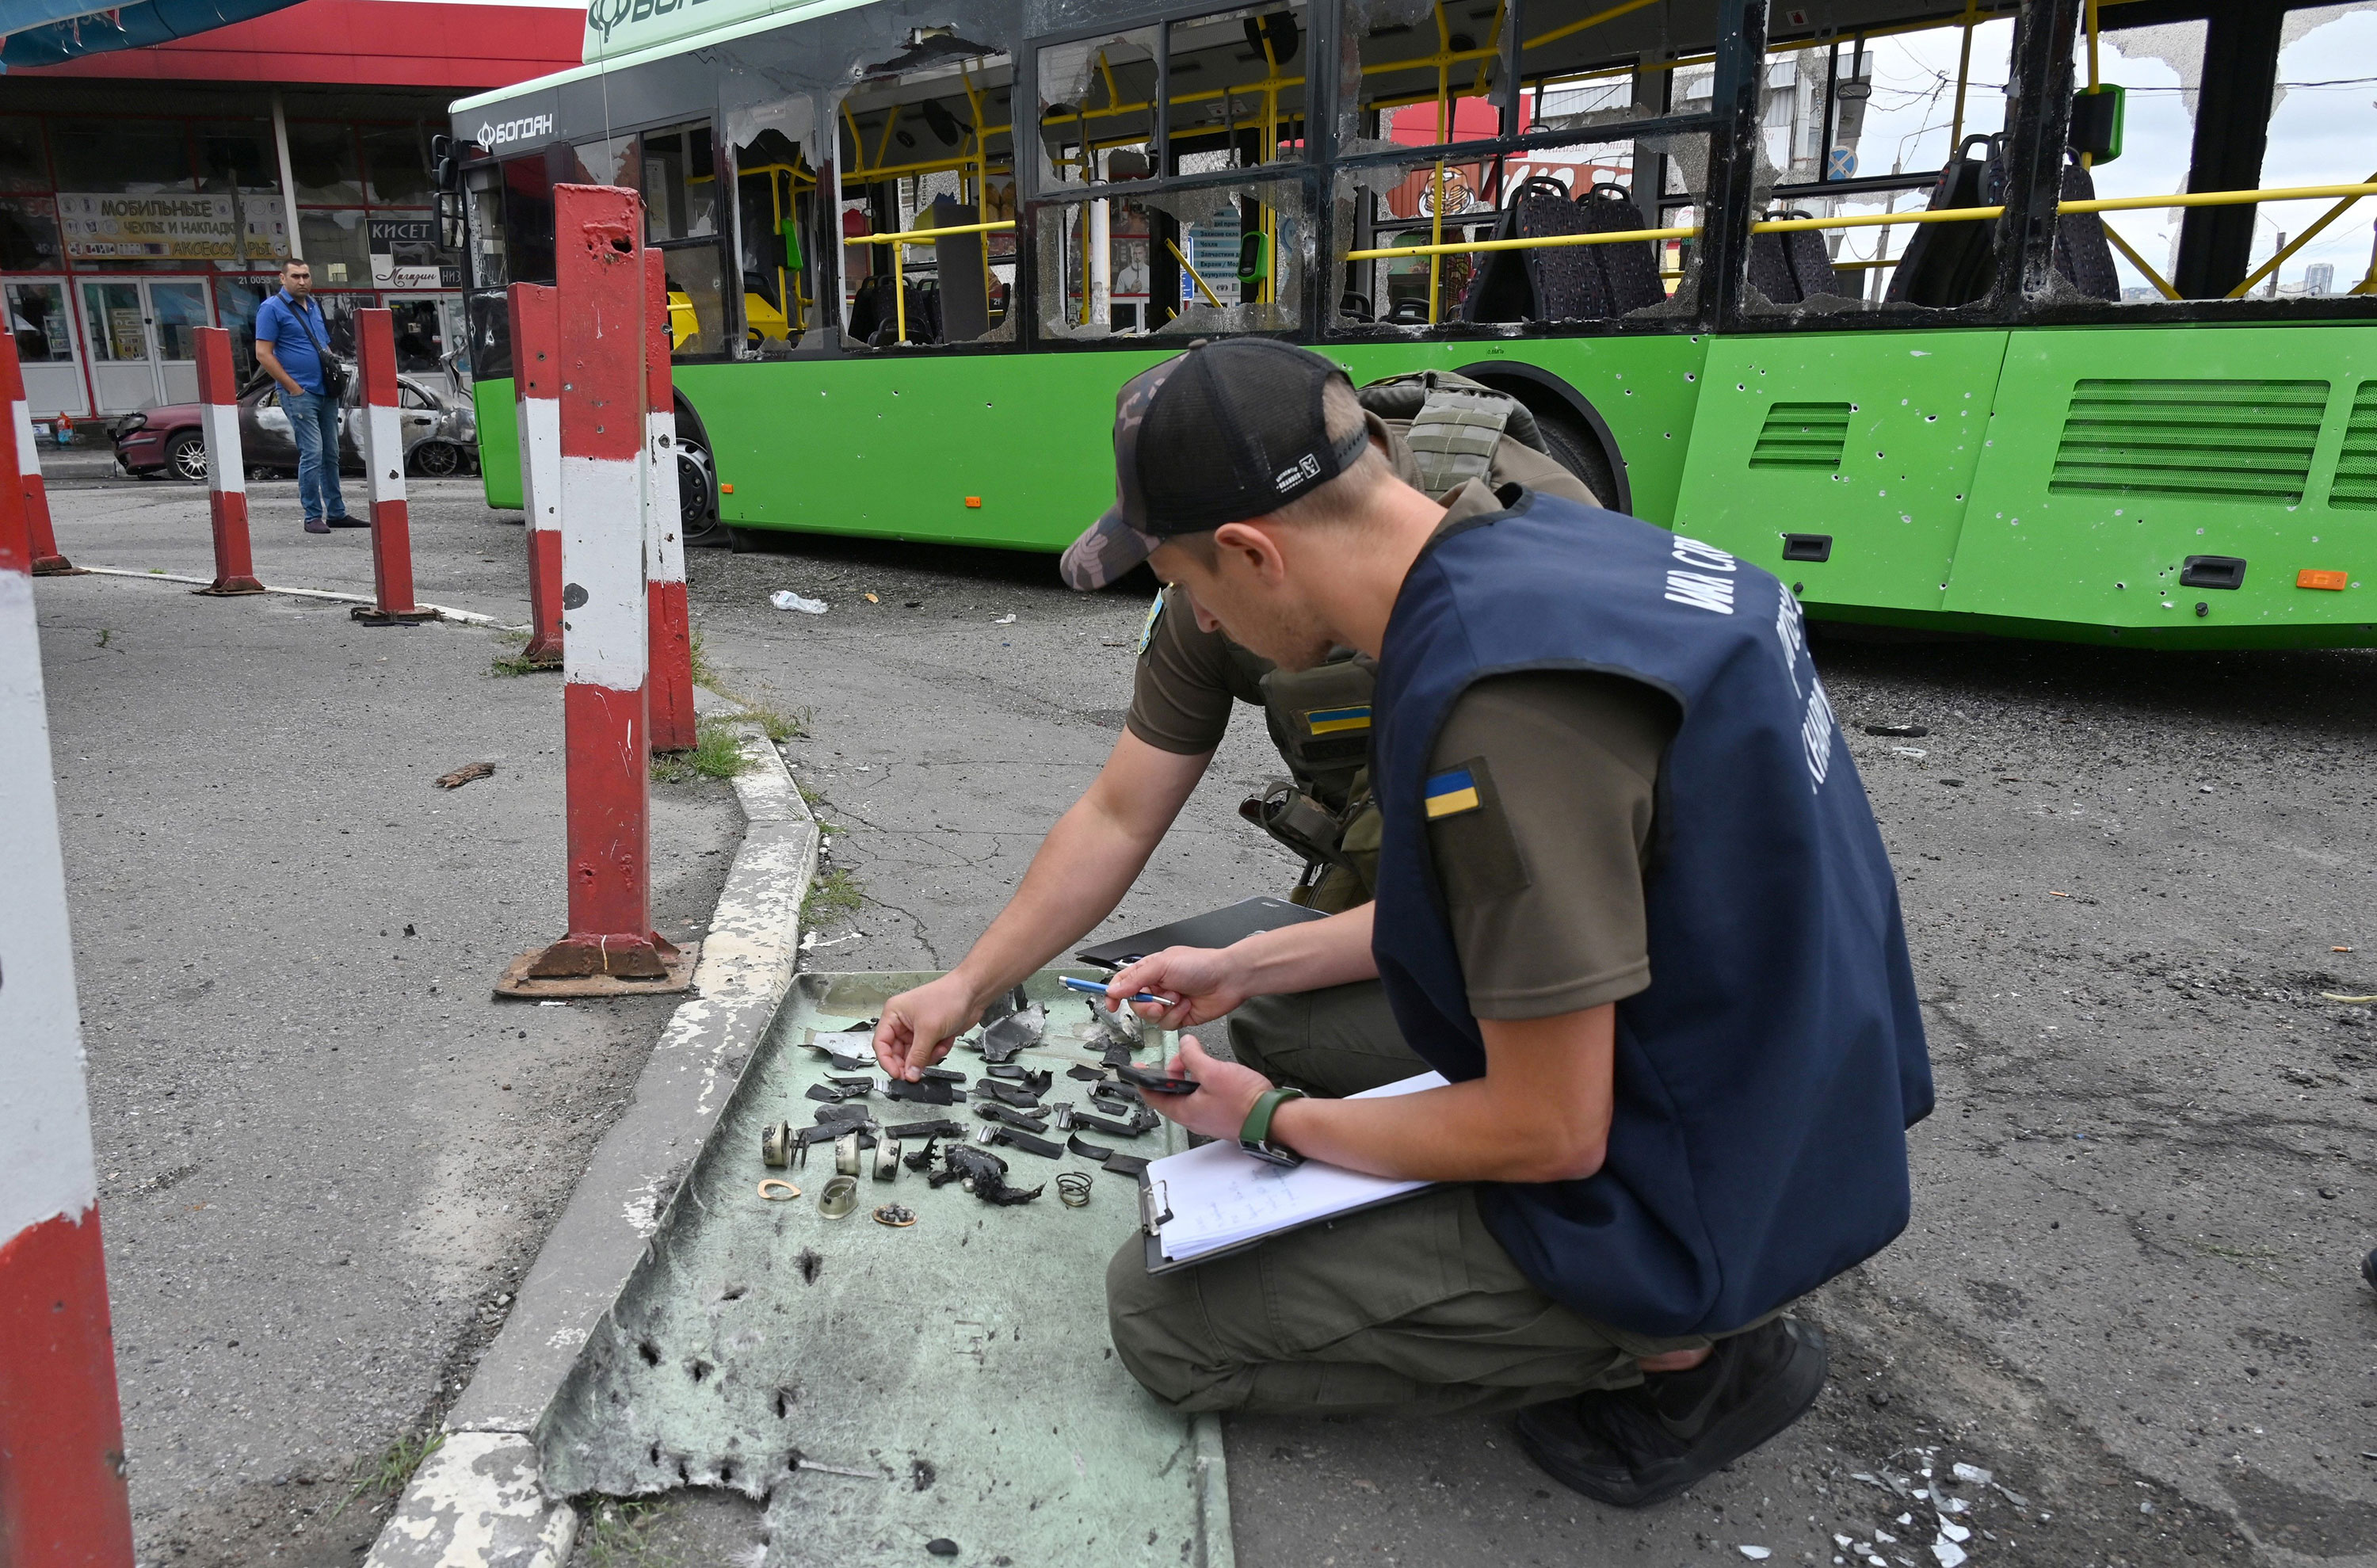 Ukrainian authorities collect fragments after a Russian rocket strike in Kharkiv, Ukraine, on Thursday.